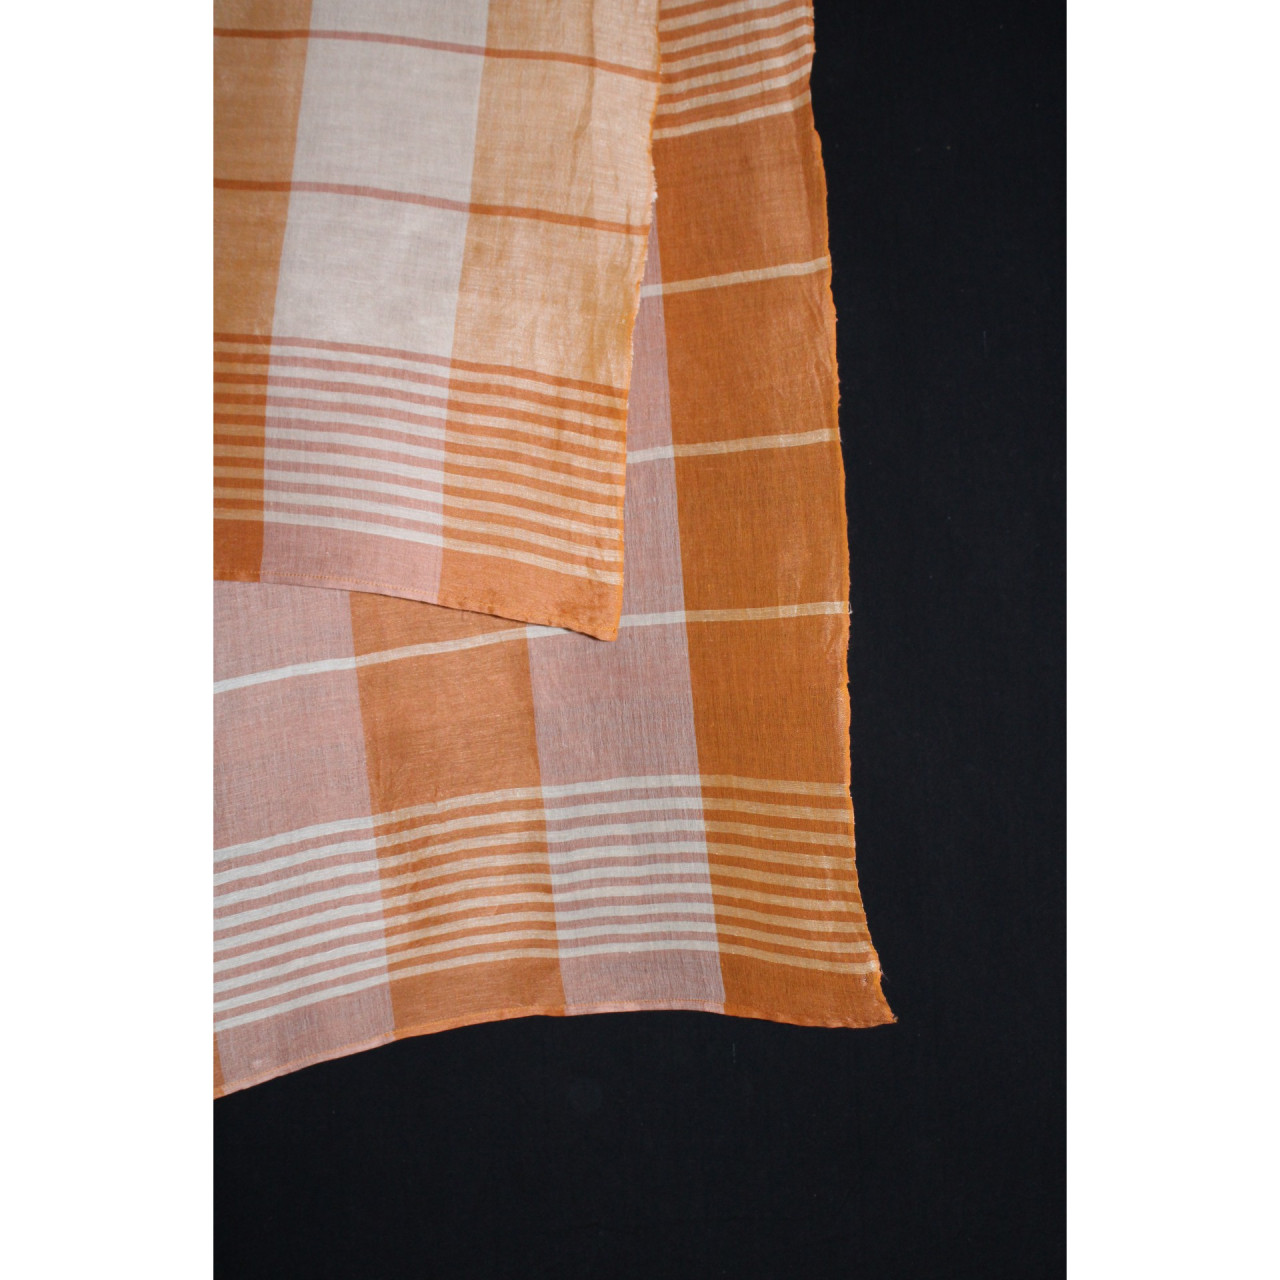 (2157) Khadi  and linen Azo-free dyed stole from Shantipur - Orange, cream, stripes, checks